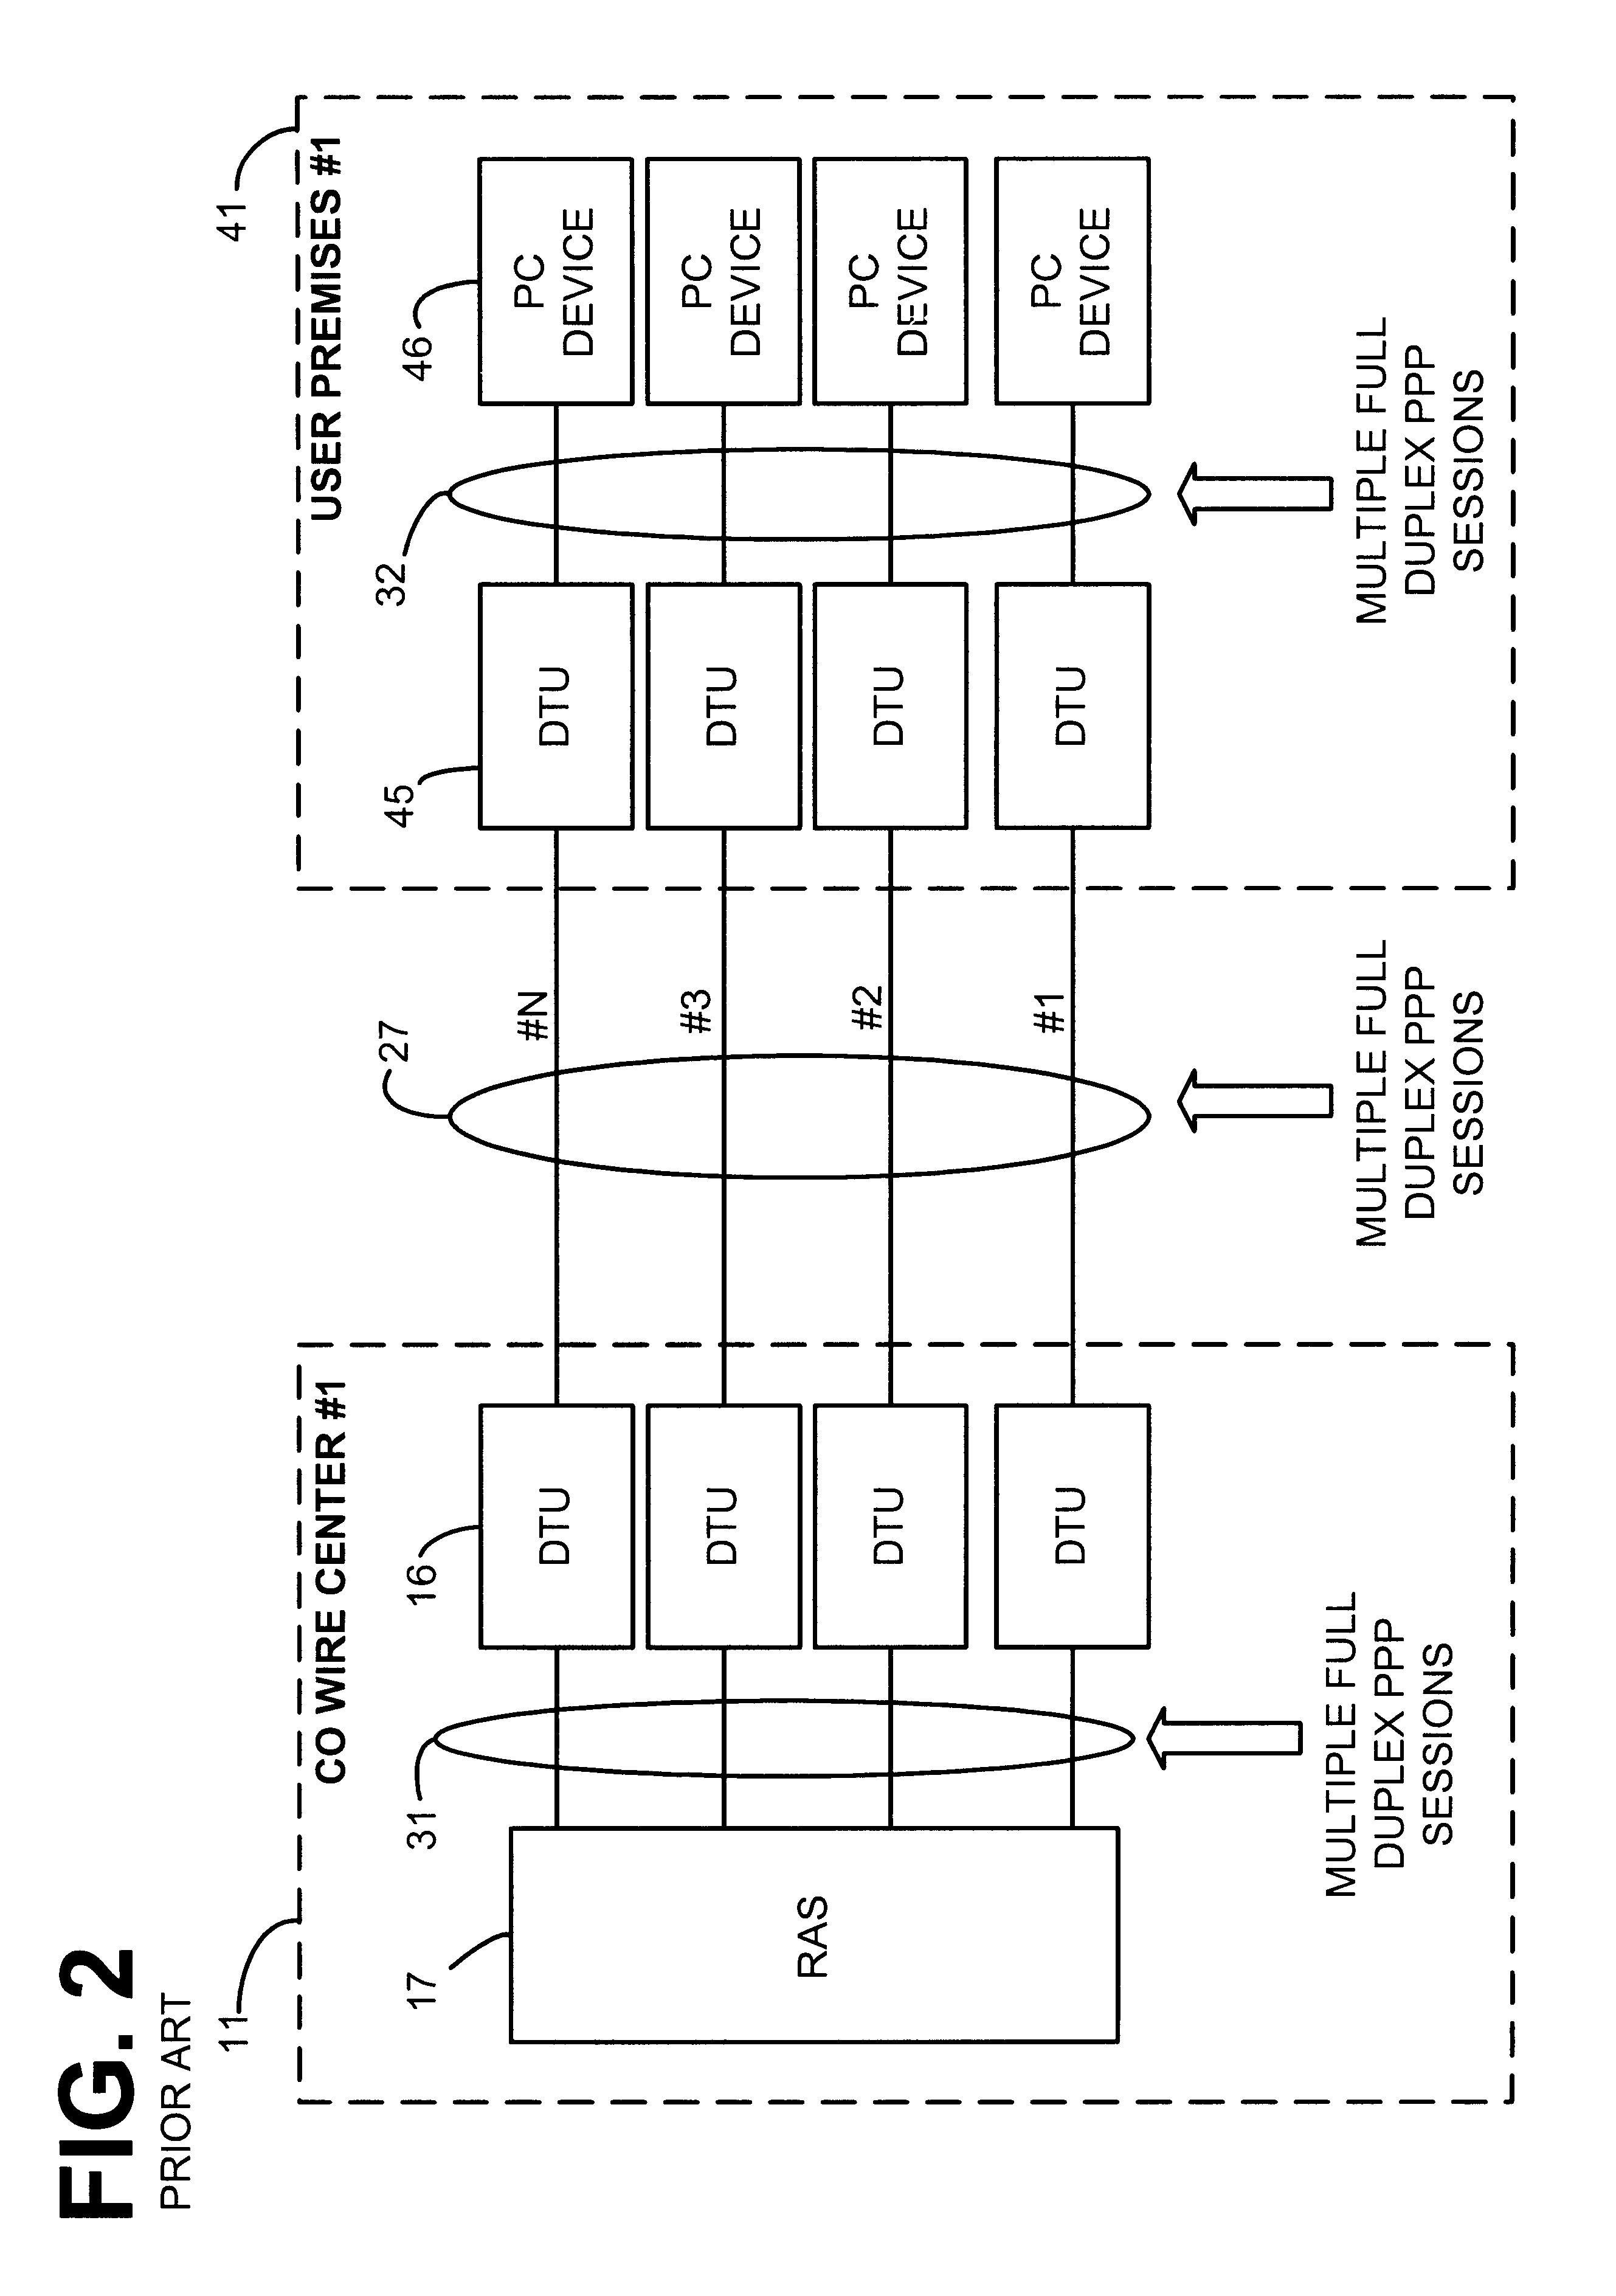 Apparatus and method for a non-symmetrical half-duplex DSL modem